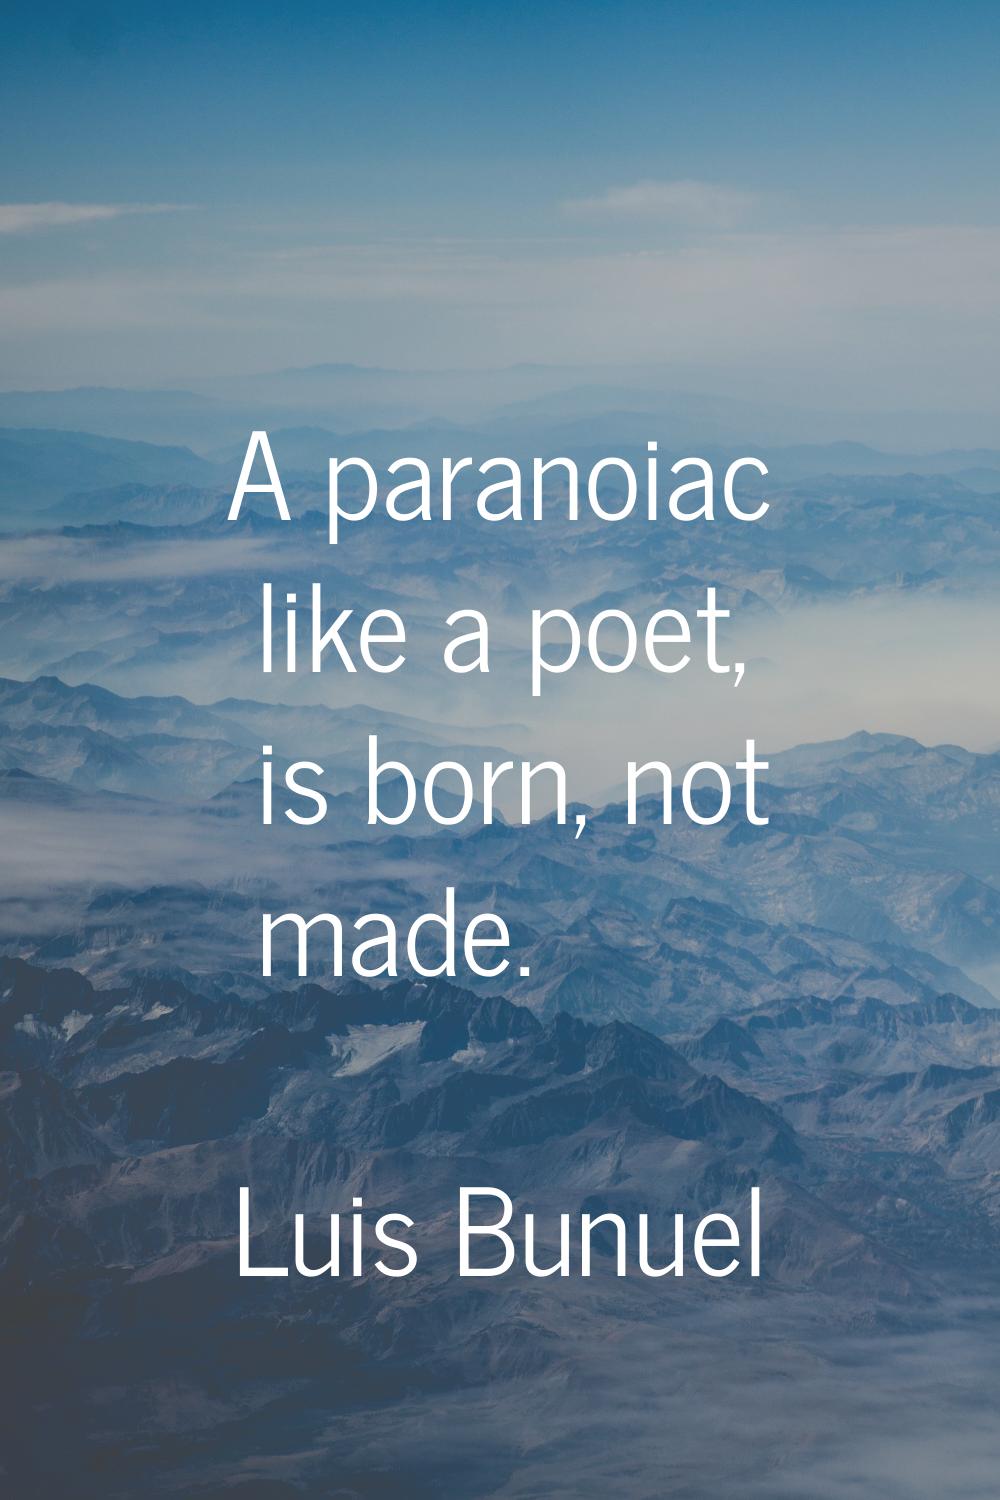 A paranoiac like a poet, is born, not made.